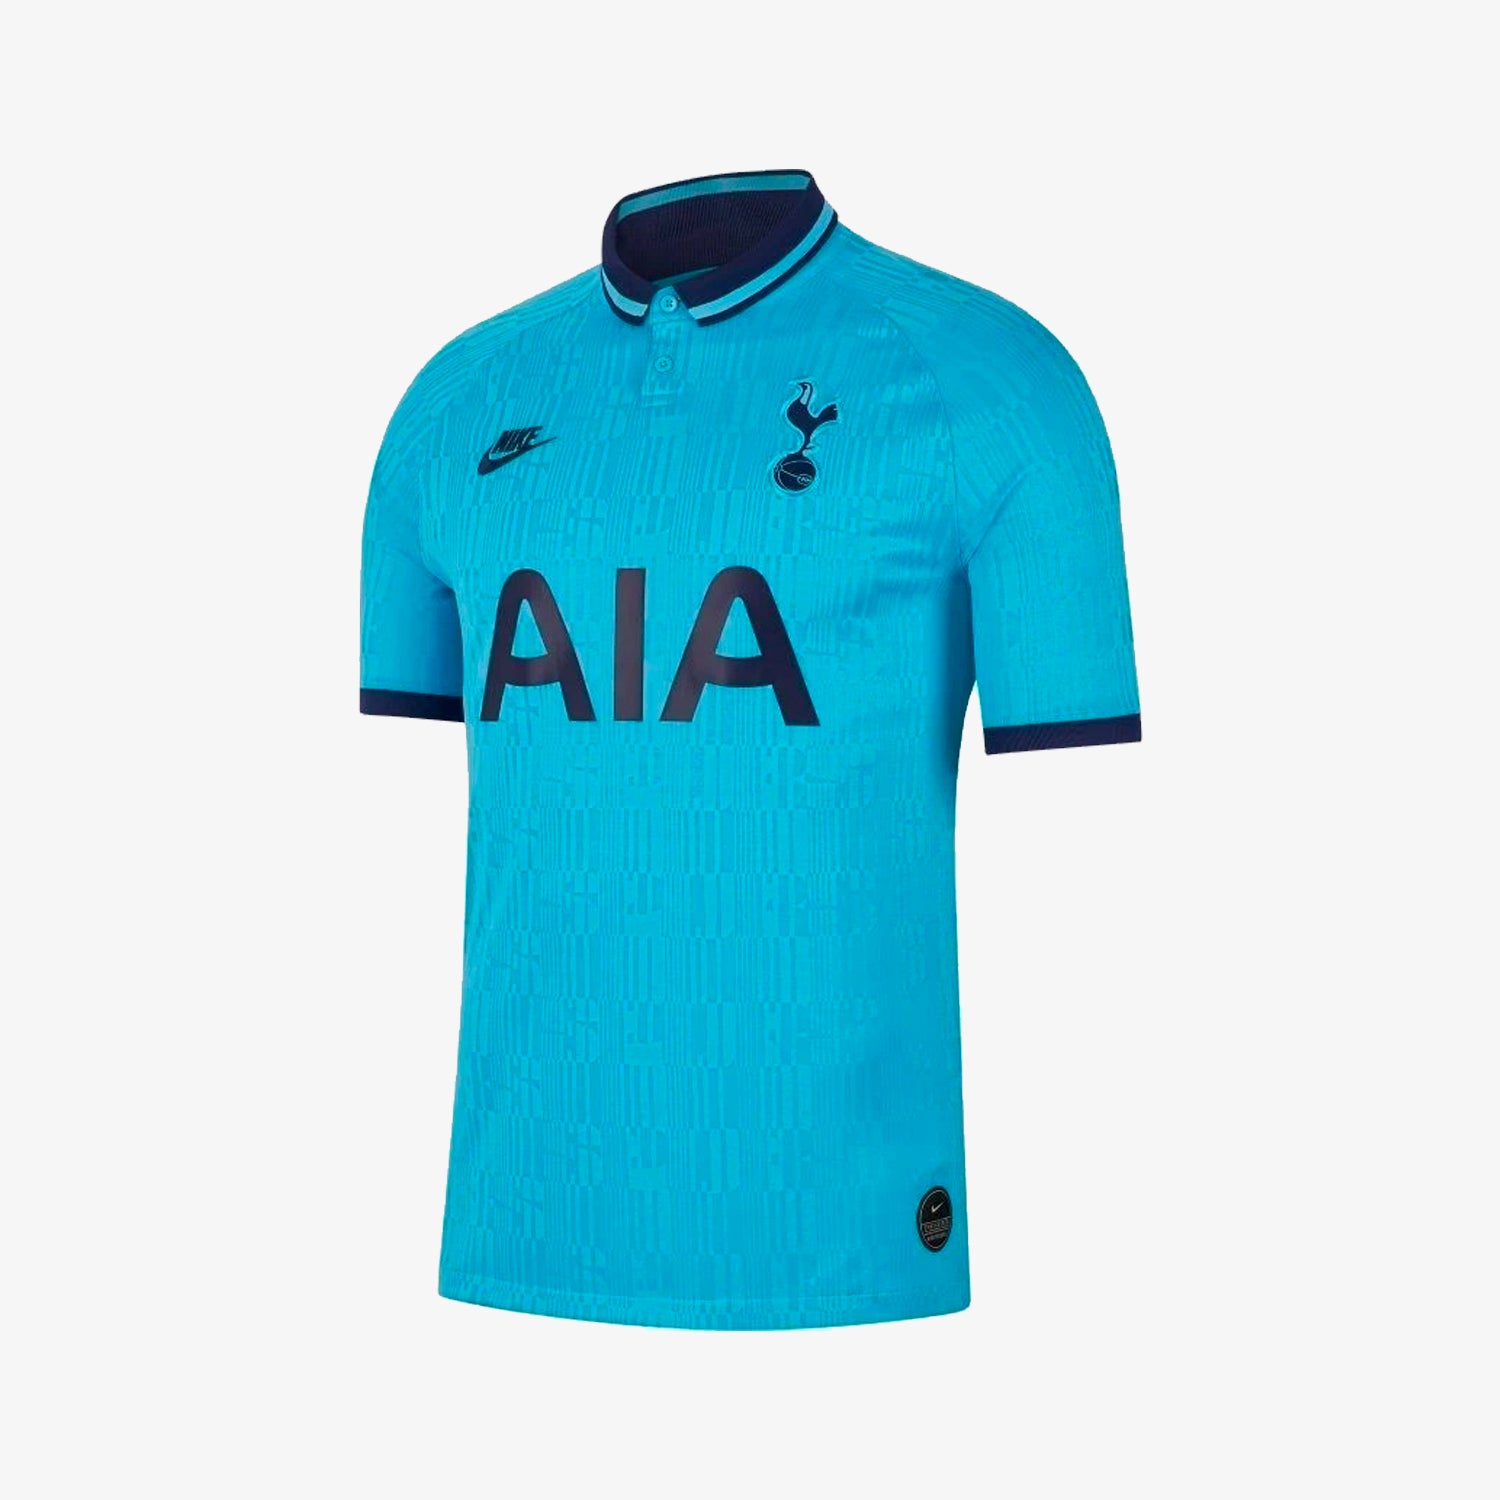 Tottenham hotspur goalkeeper jersey soccer uniform men's